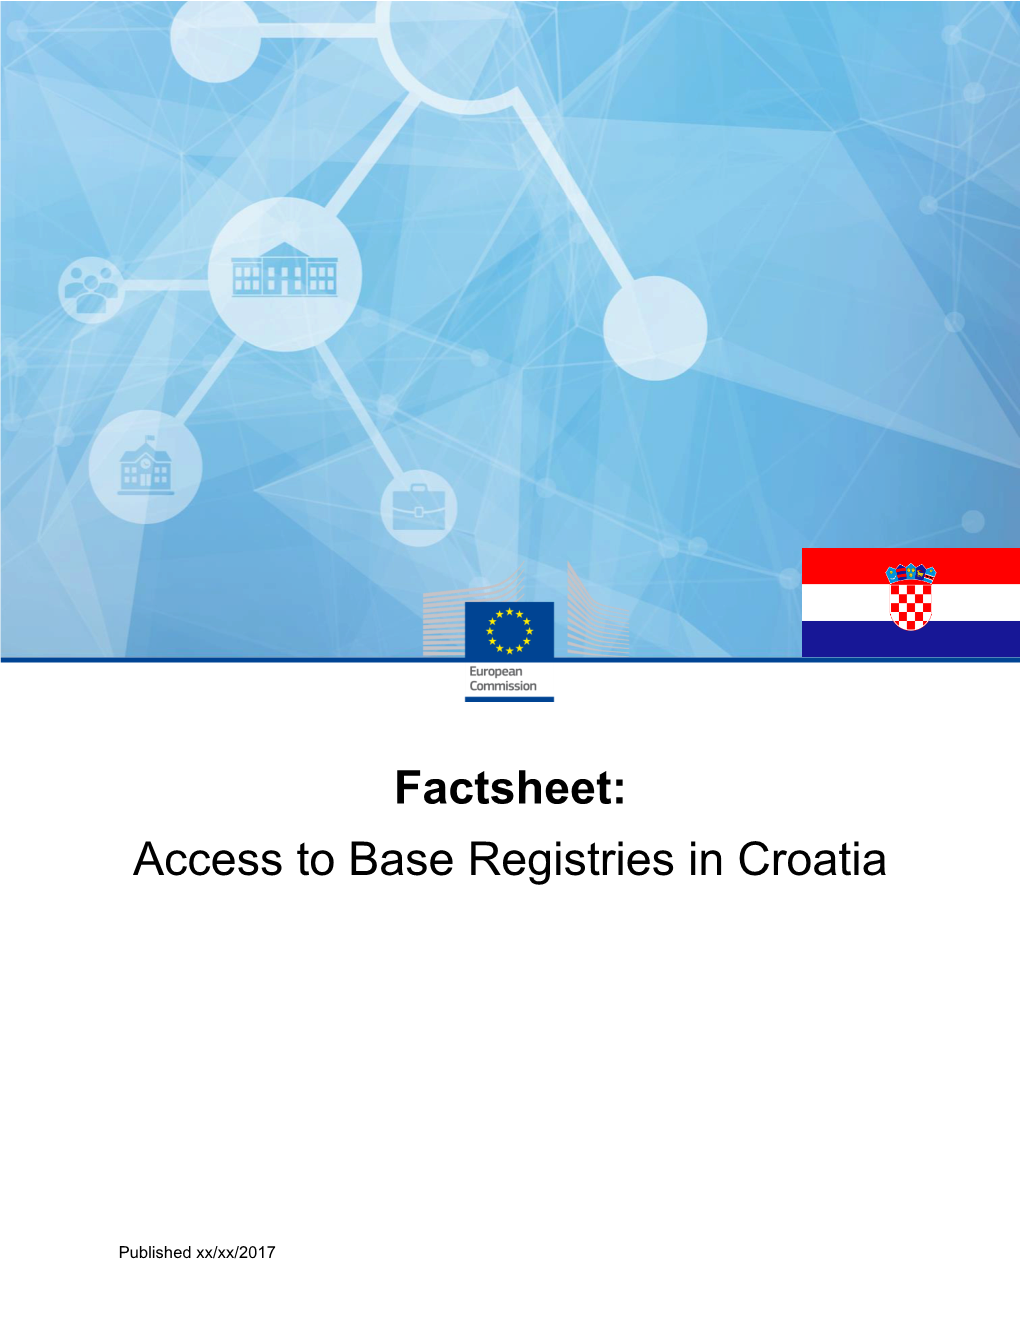 Factsheet: Access to Base Registries in Croatia